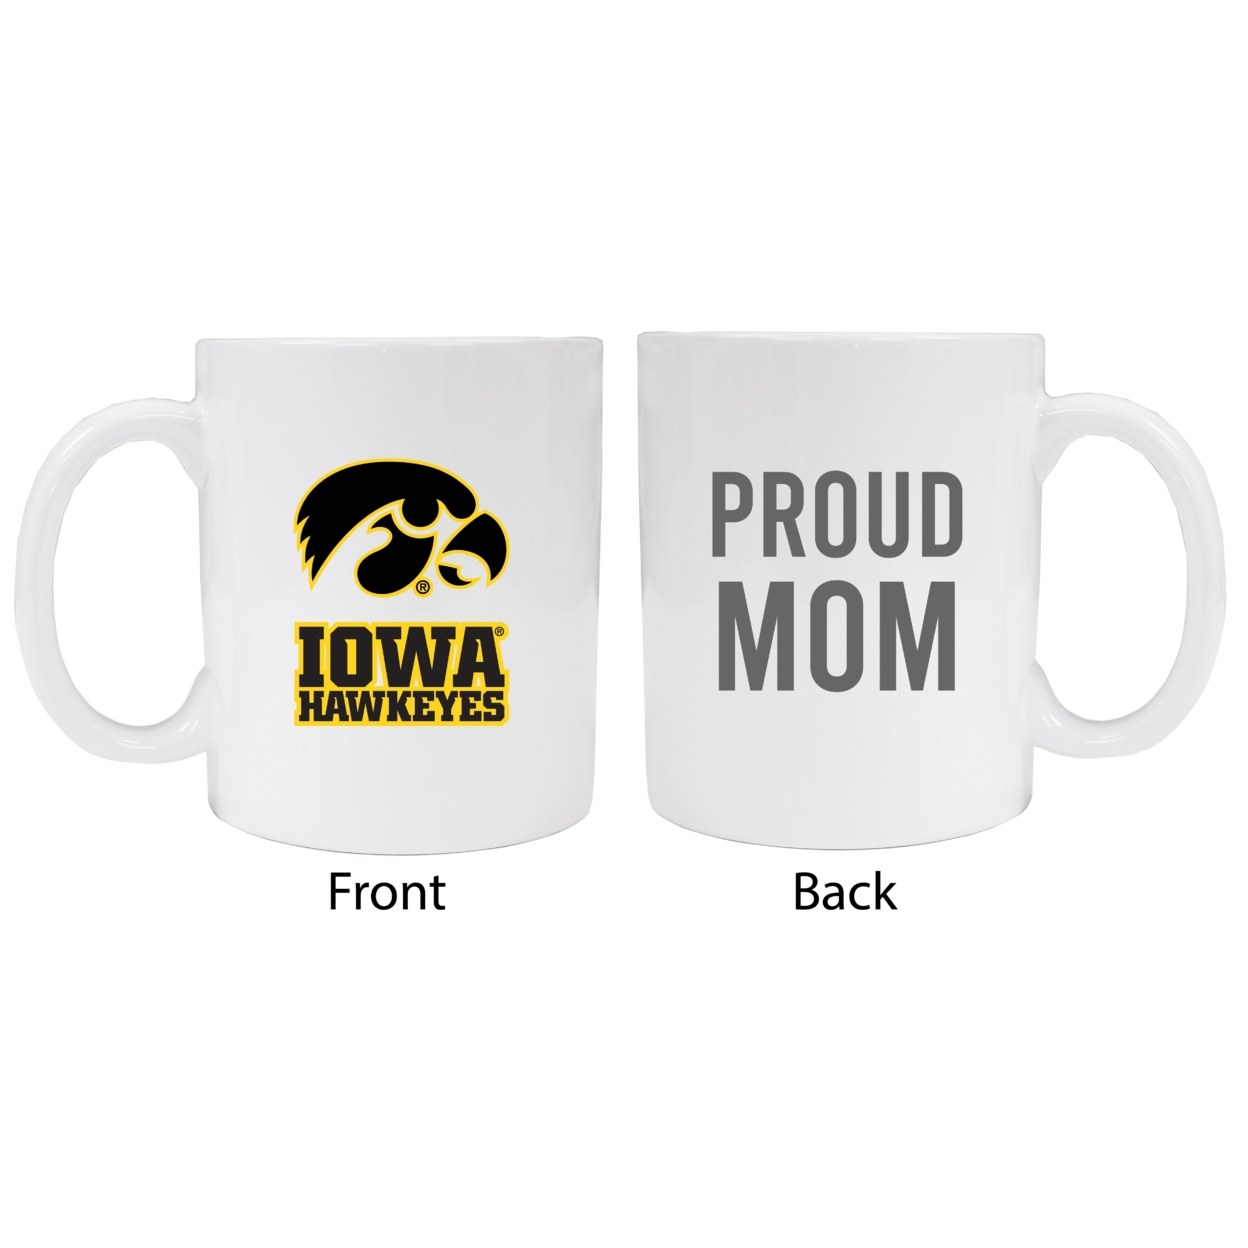 Iowa Hawkeyes Proud Mom Ceramic Coffee Mug - White (2 Pack)